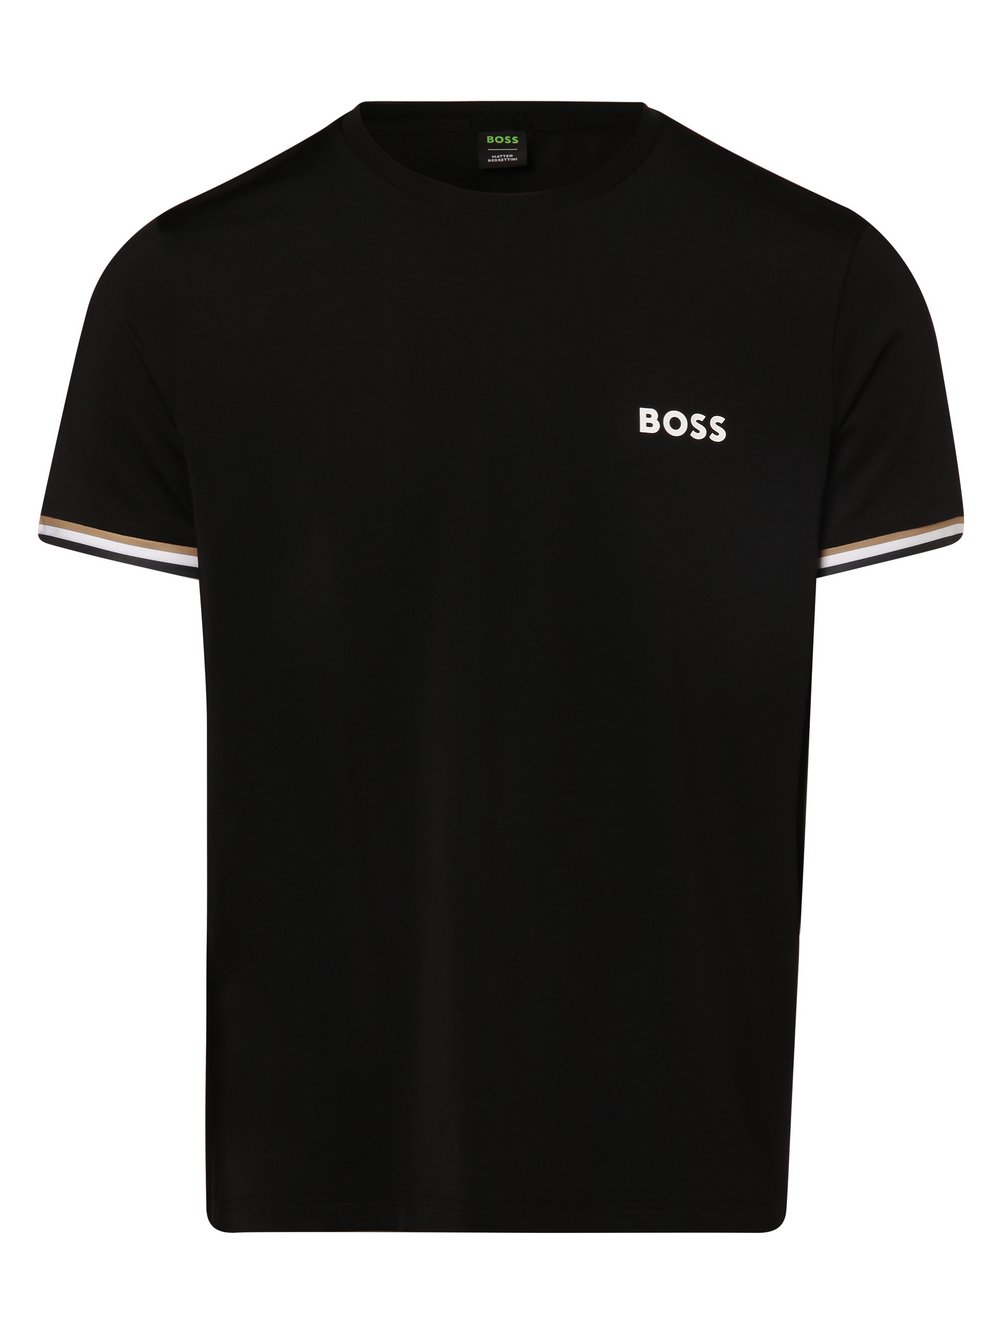 BOSS Green - T-shirt męski – Tee MB 2, czarny